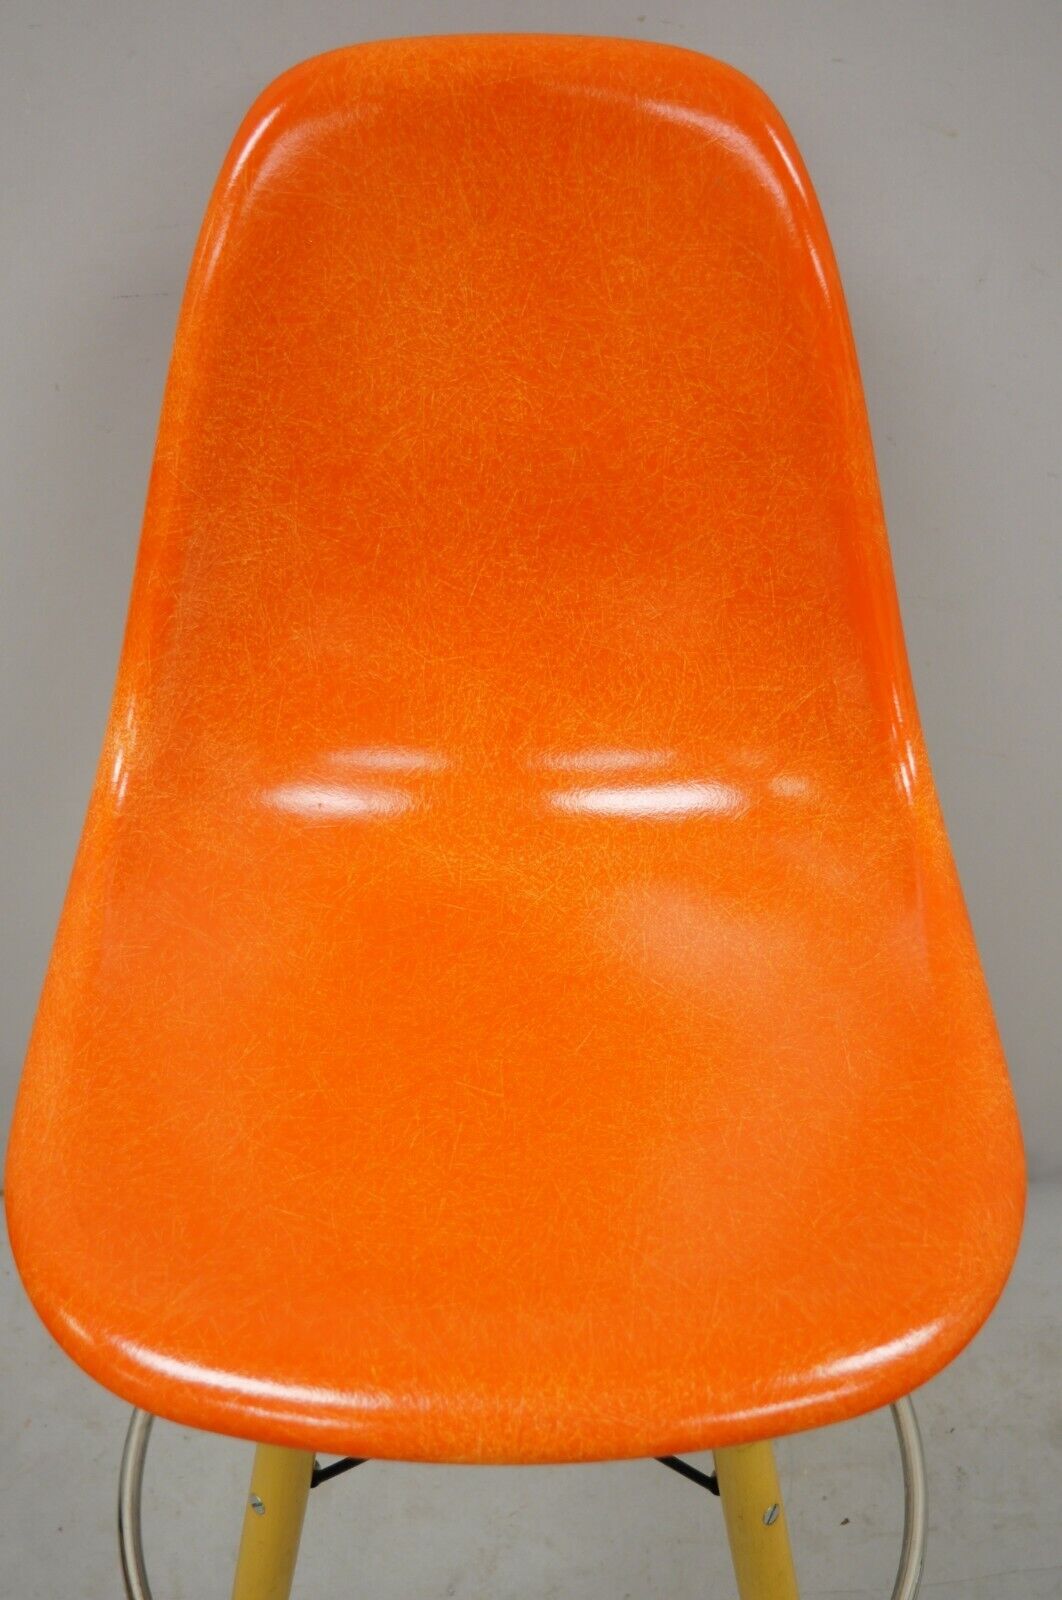 Modernica Orange Fiberglass Eames Style Shell Case Study Dowel Swivel Barstool